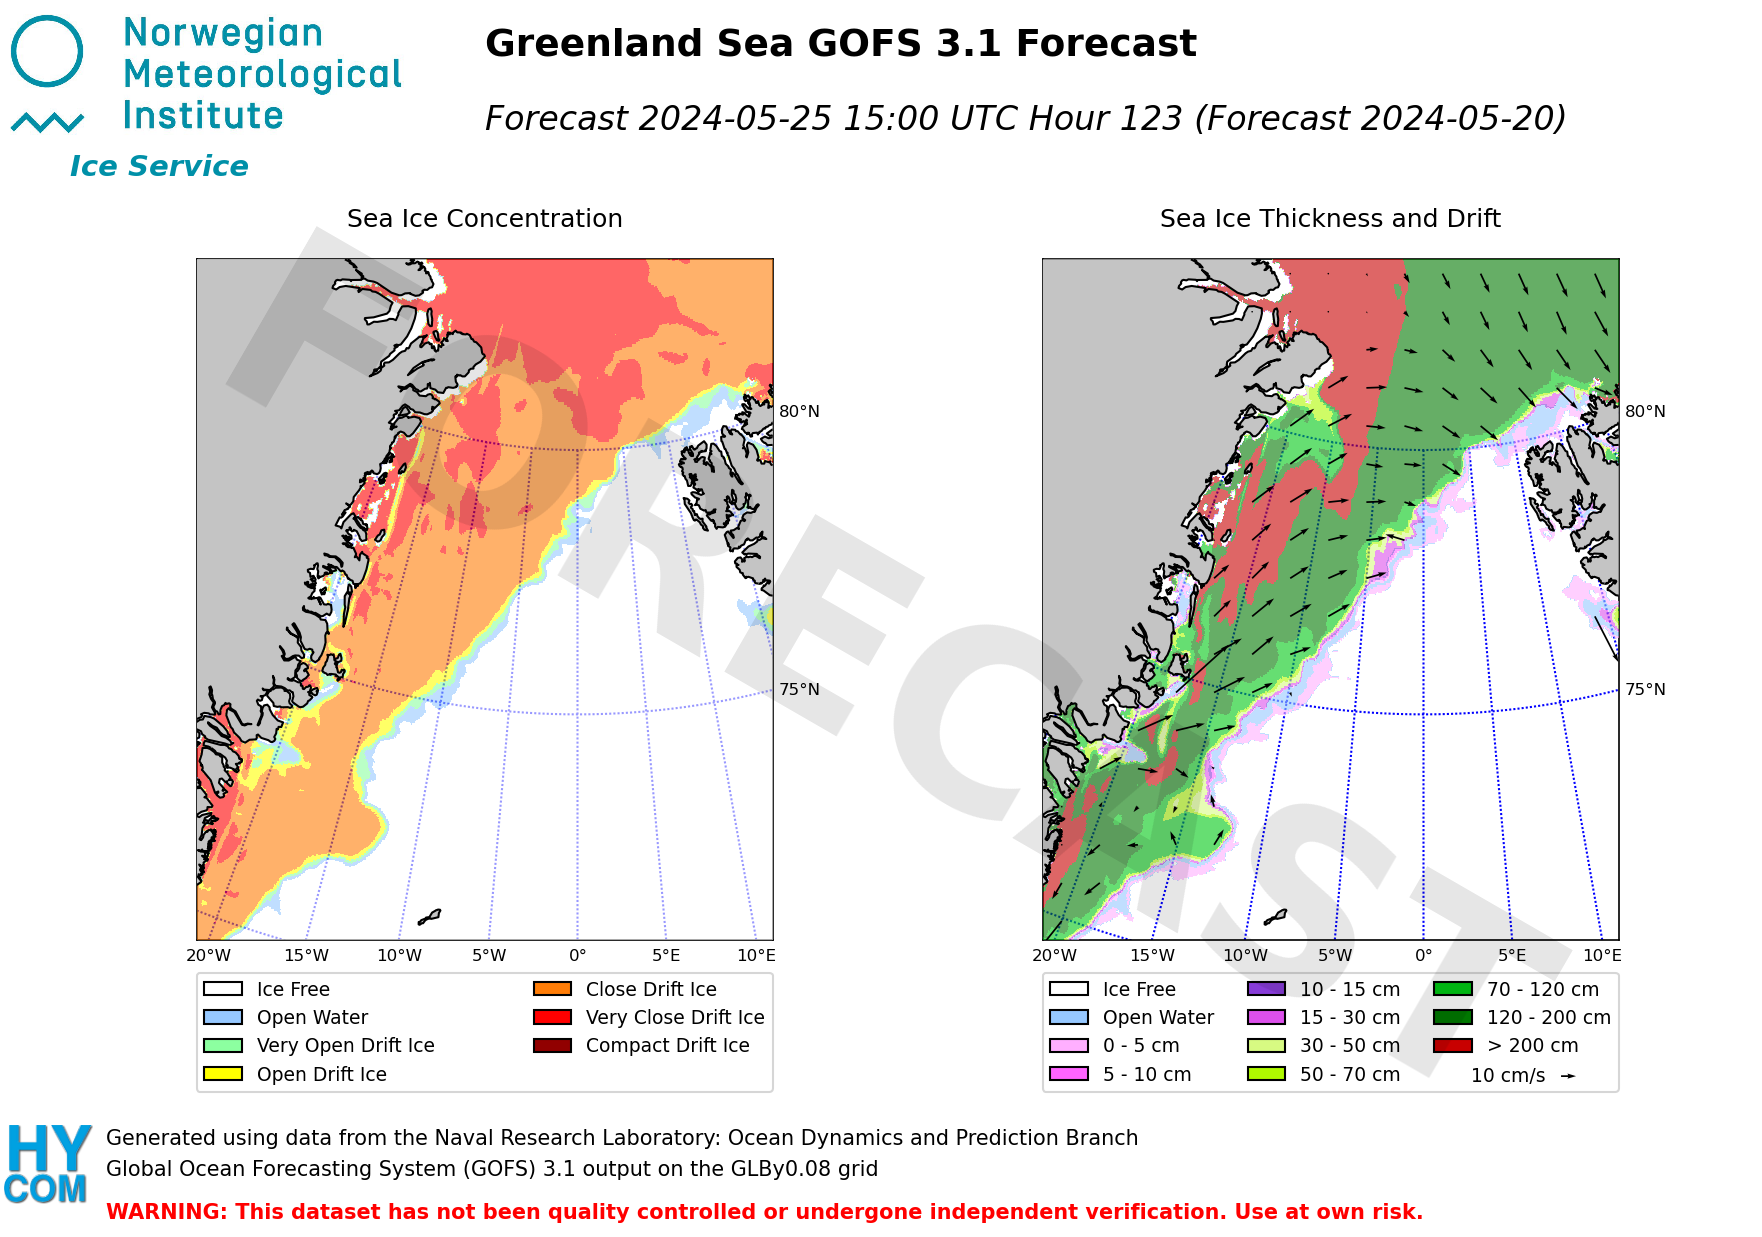 Latest GOF3.1 4-day forecast